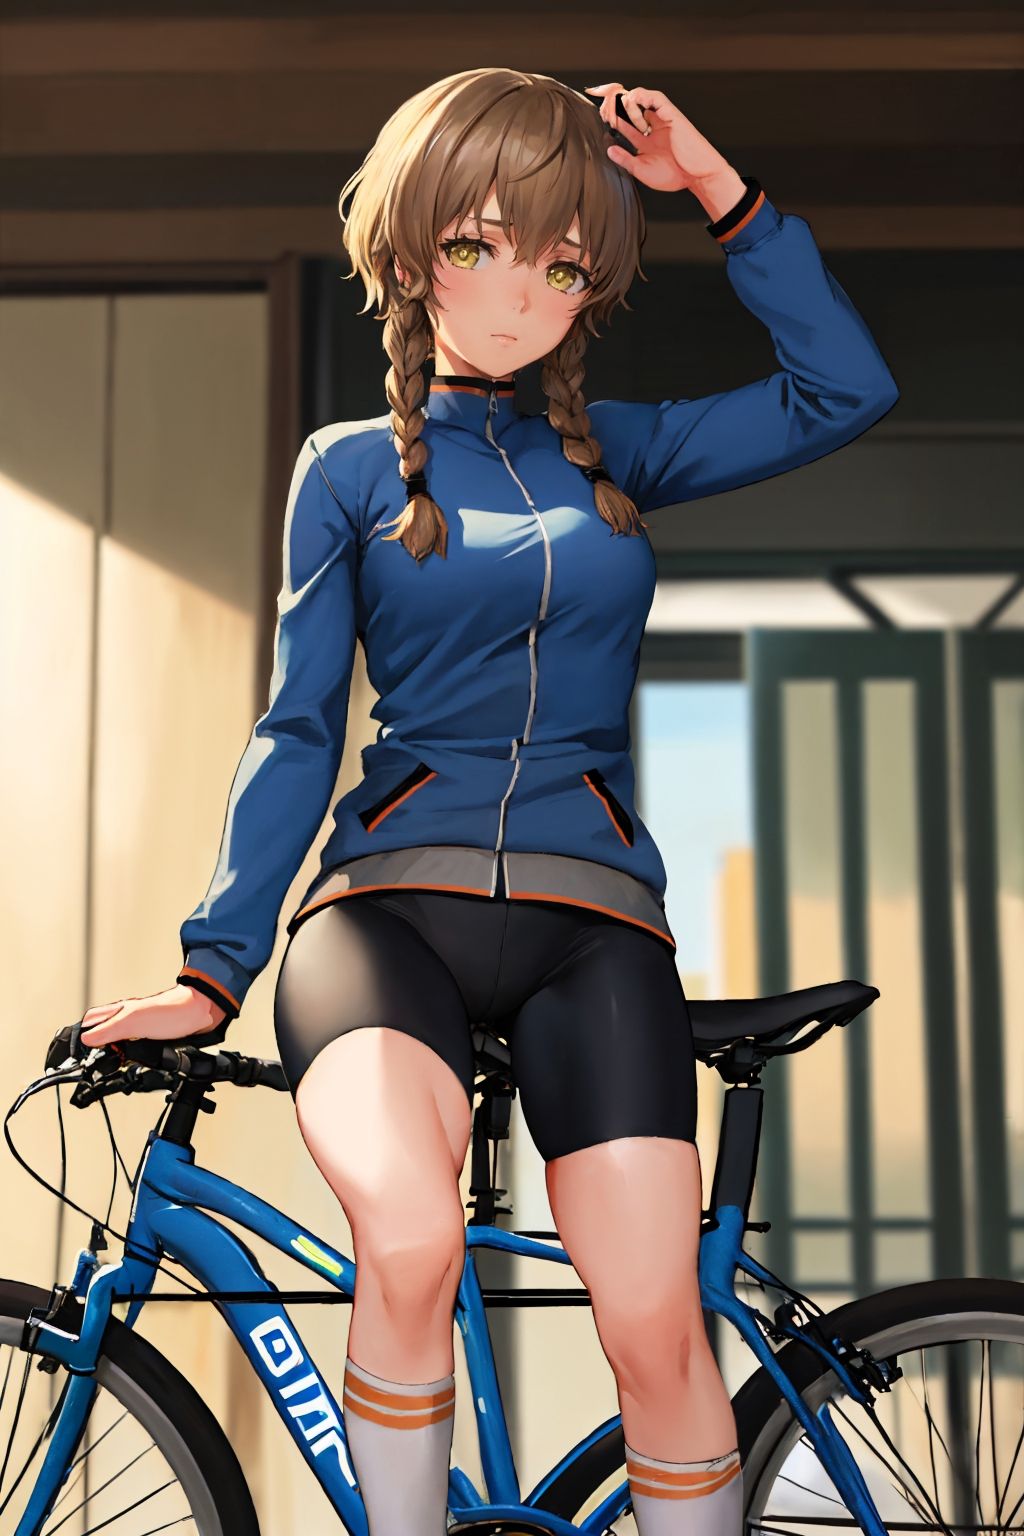 art.fm - #eren #erenjaeger #attackontitan #attackontitanedit #anime  #animeart #manga #fixedgear #fixiebike #bike #fixedlife #trackbike  #brakeless #bicycleart #bicycle #cycling #cyclist #cyclingart  #adobeillustrator | Facebook